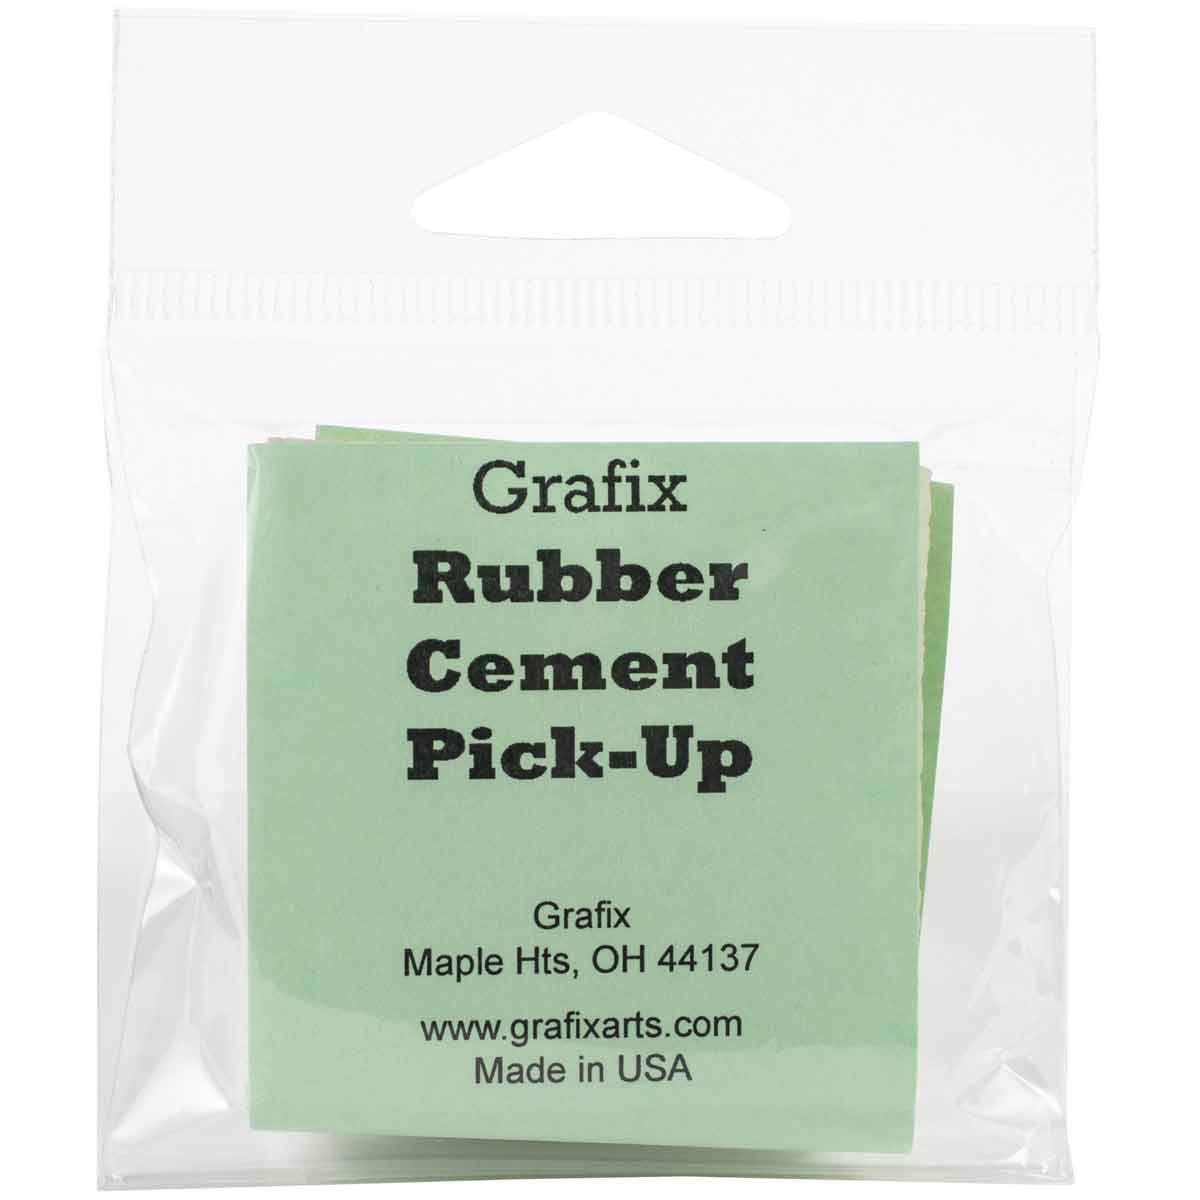 Grafix Rubber Cement Pick-Up 2 x 2 inch